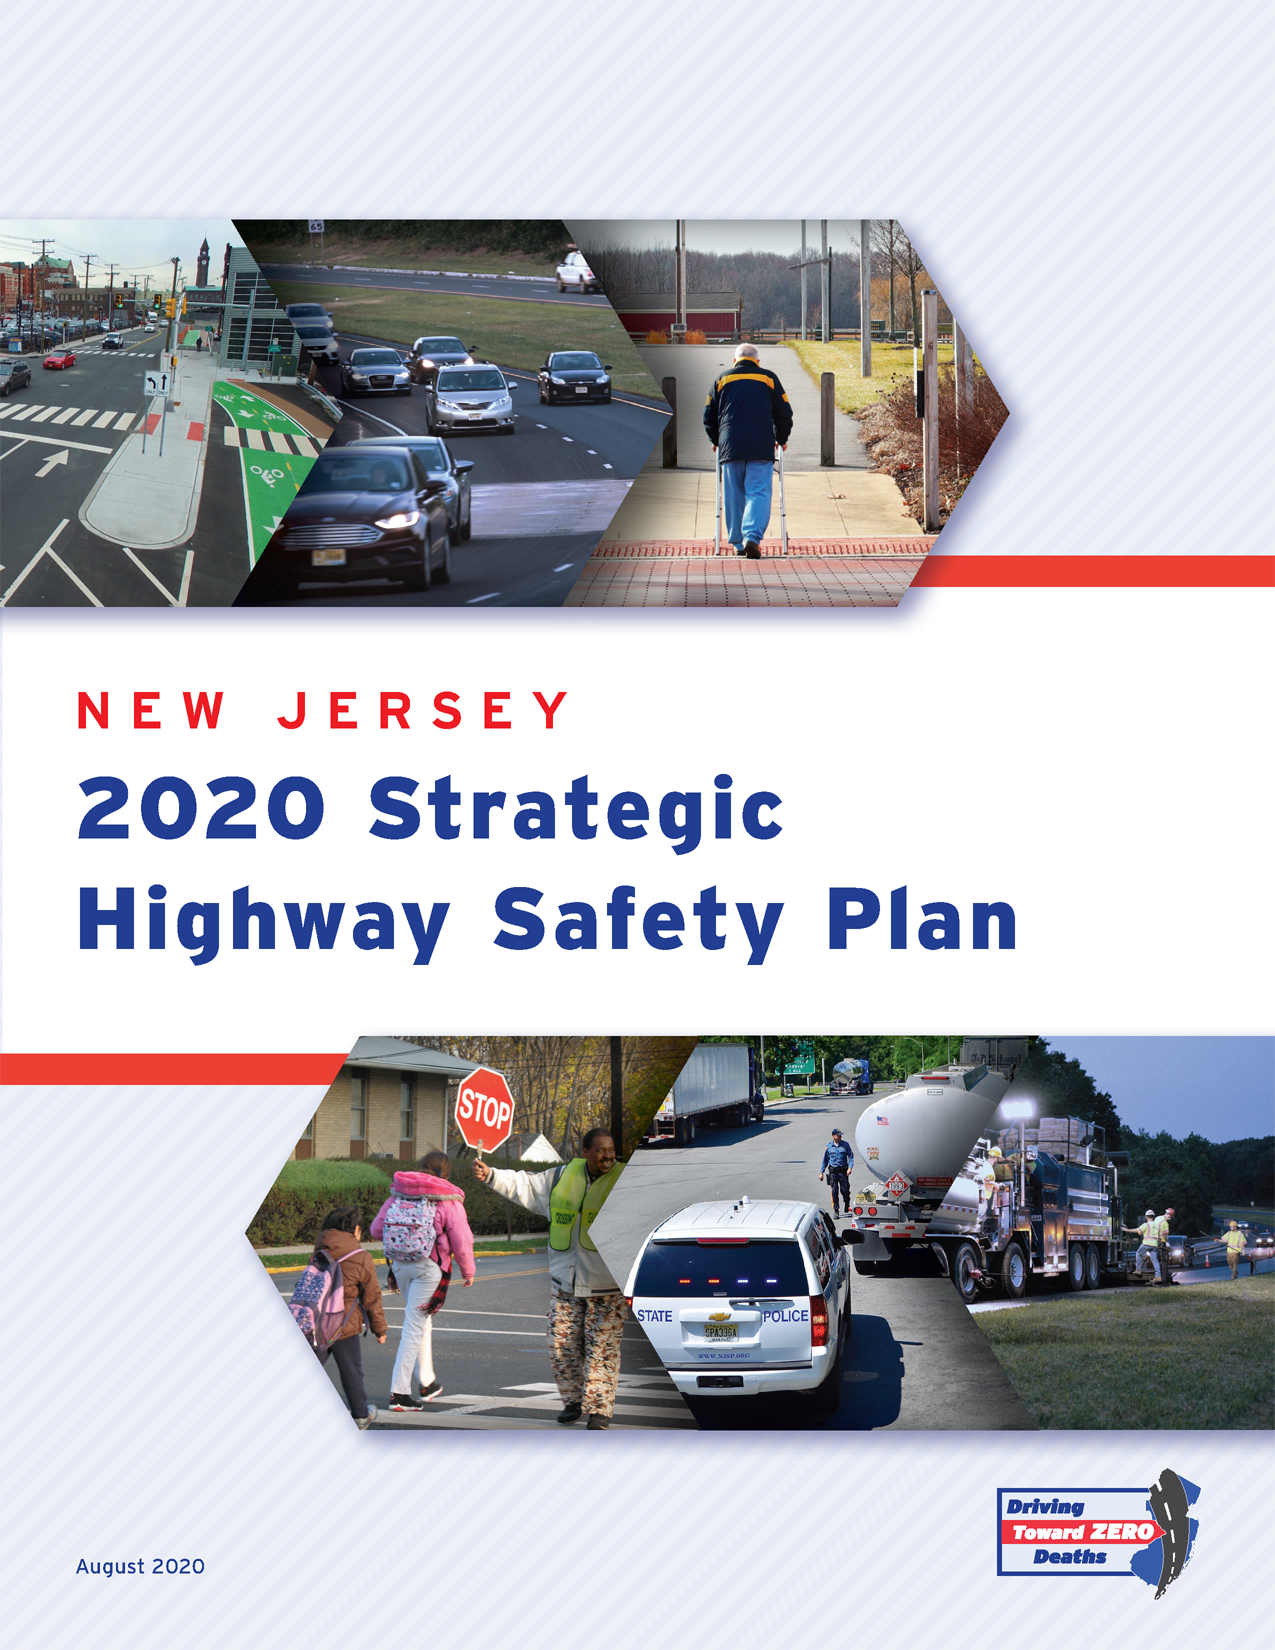 Driving Toward Zero Deaths NJ